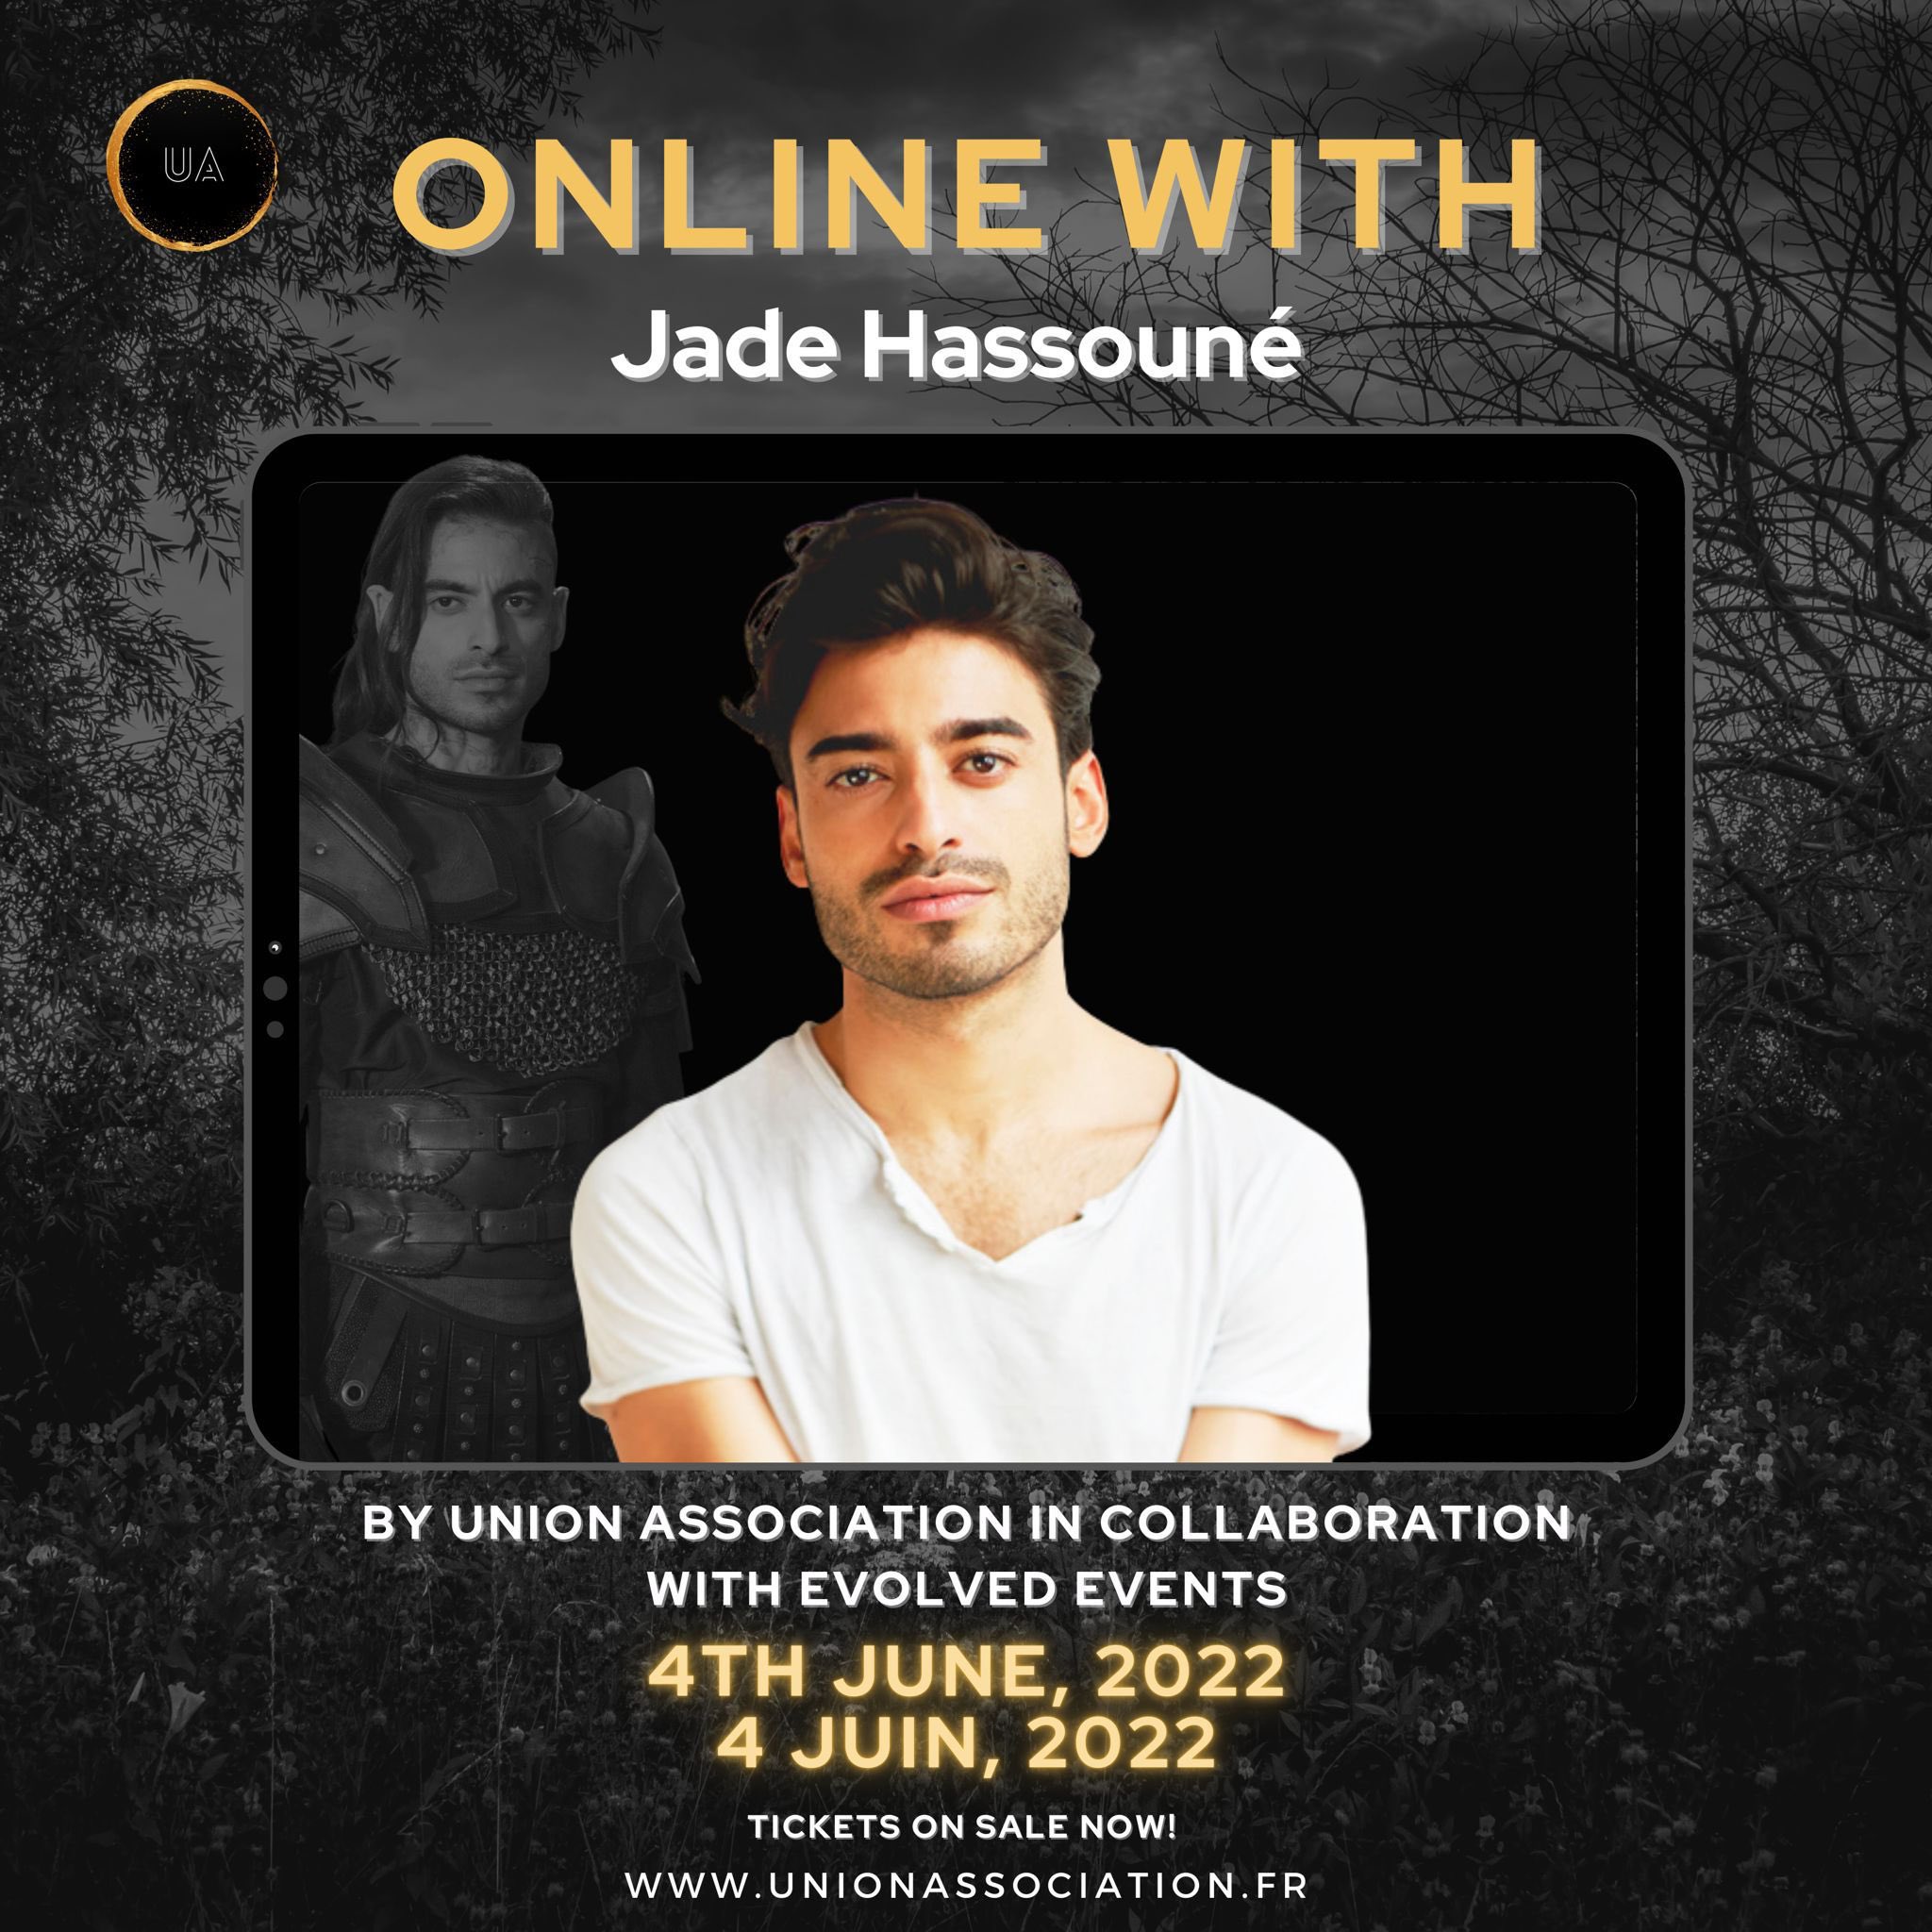 Jade Hassouné (Shadowhunters) bientôt en virtuel